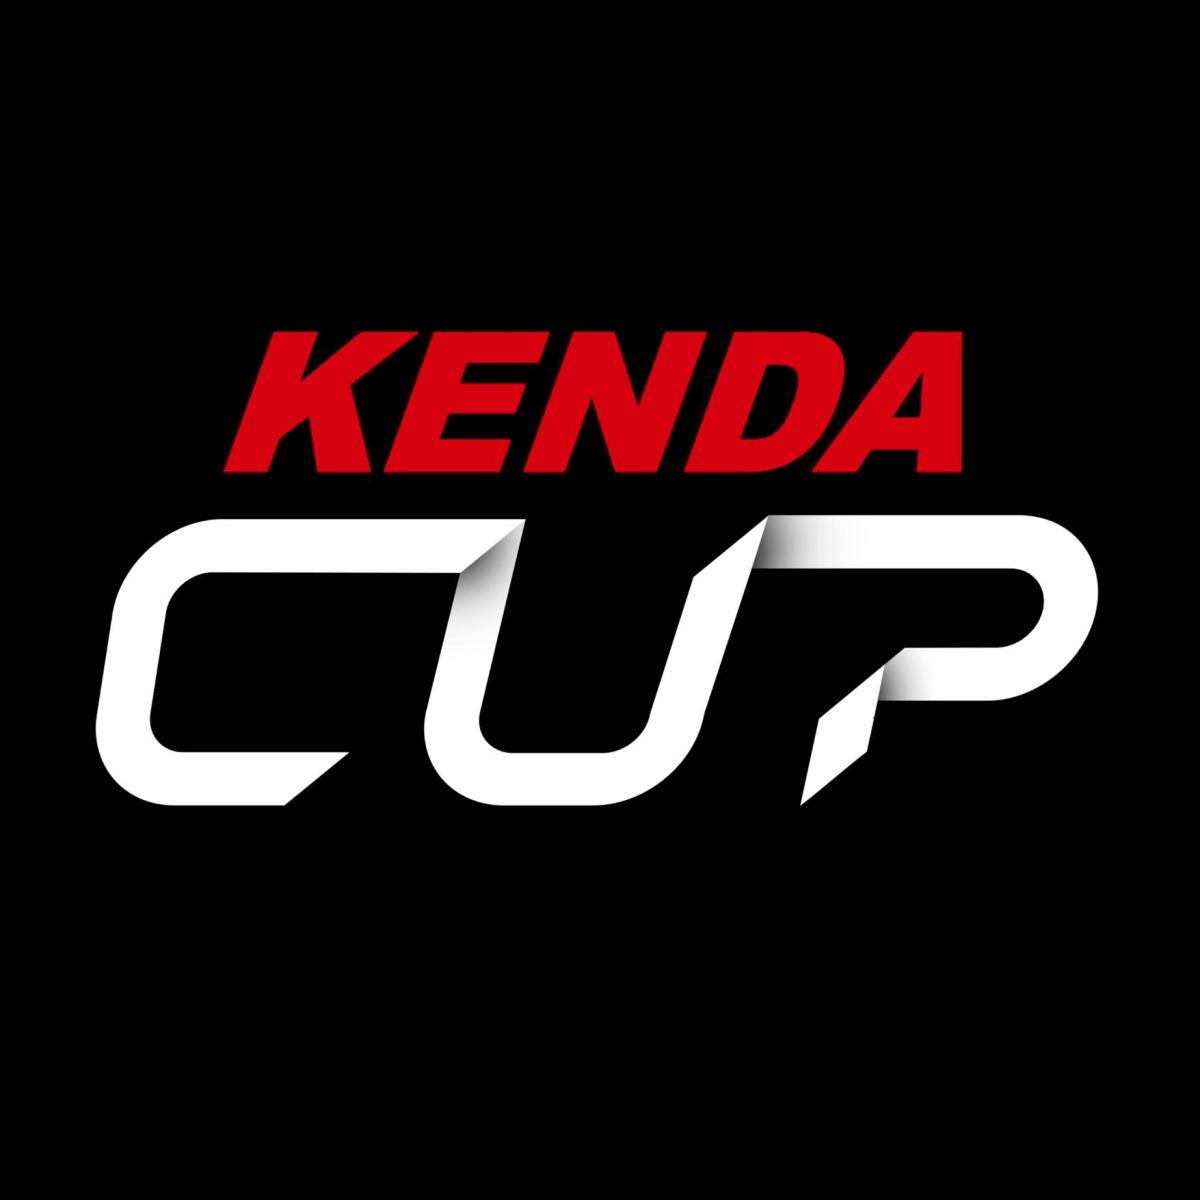 Kenda Open Cup MTB 2ª etapa 2024